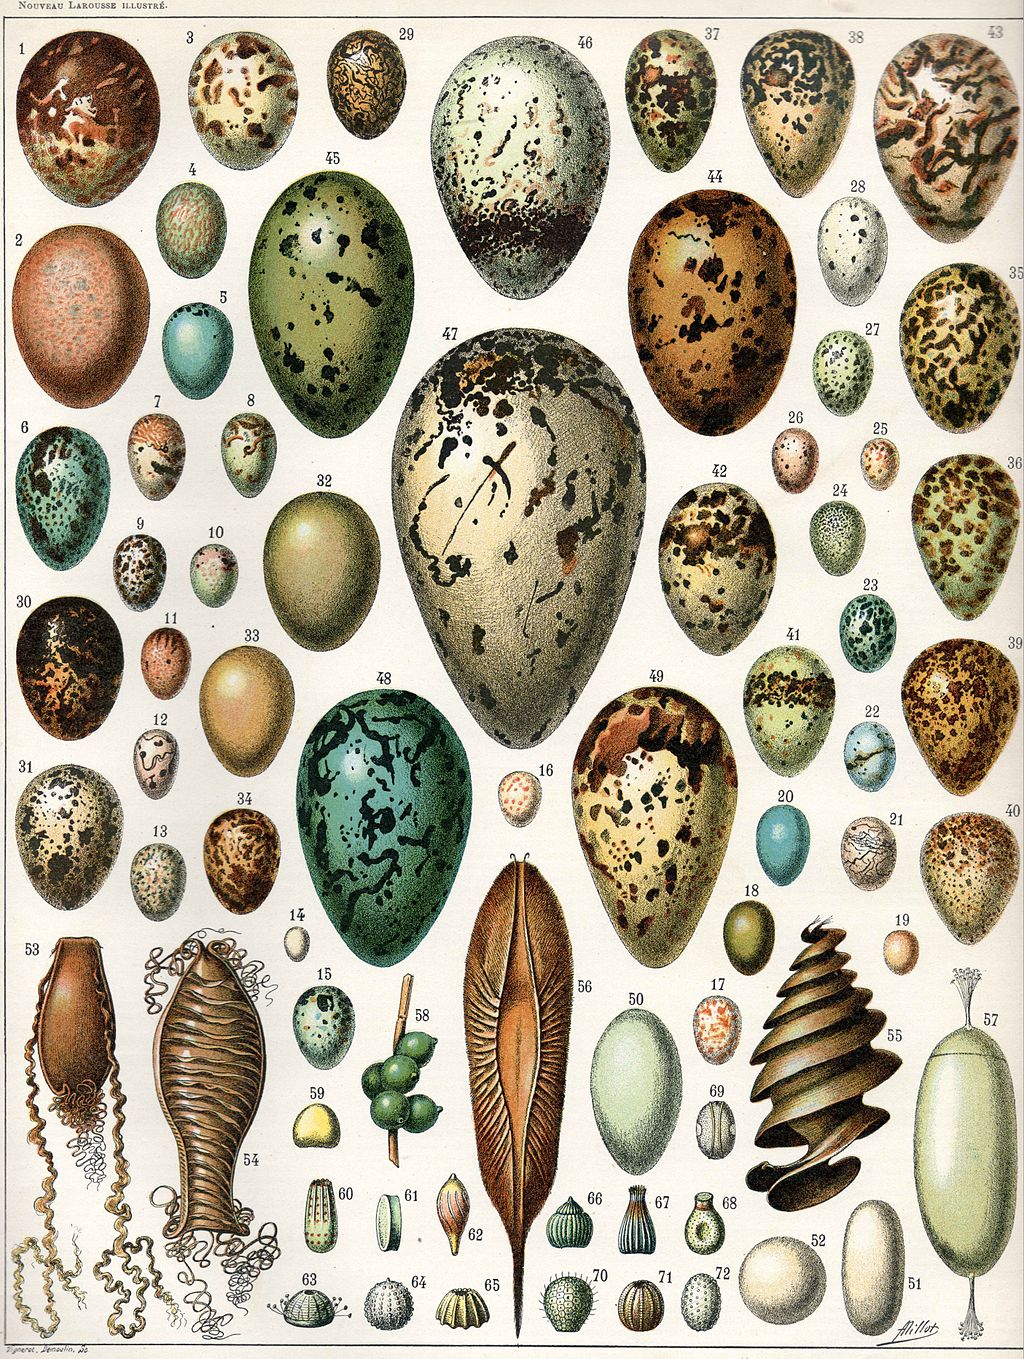 Scientific illustration of a range of different eggs